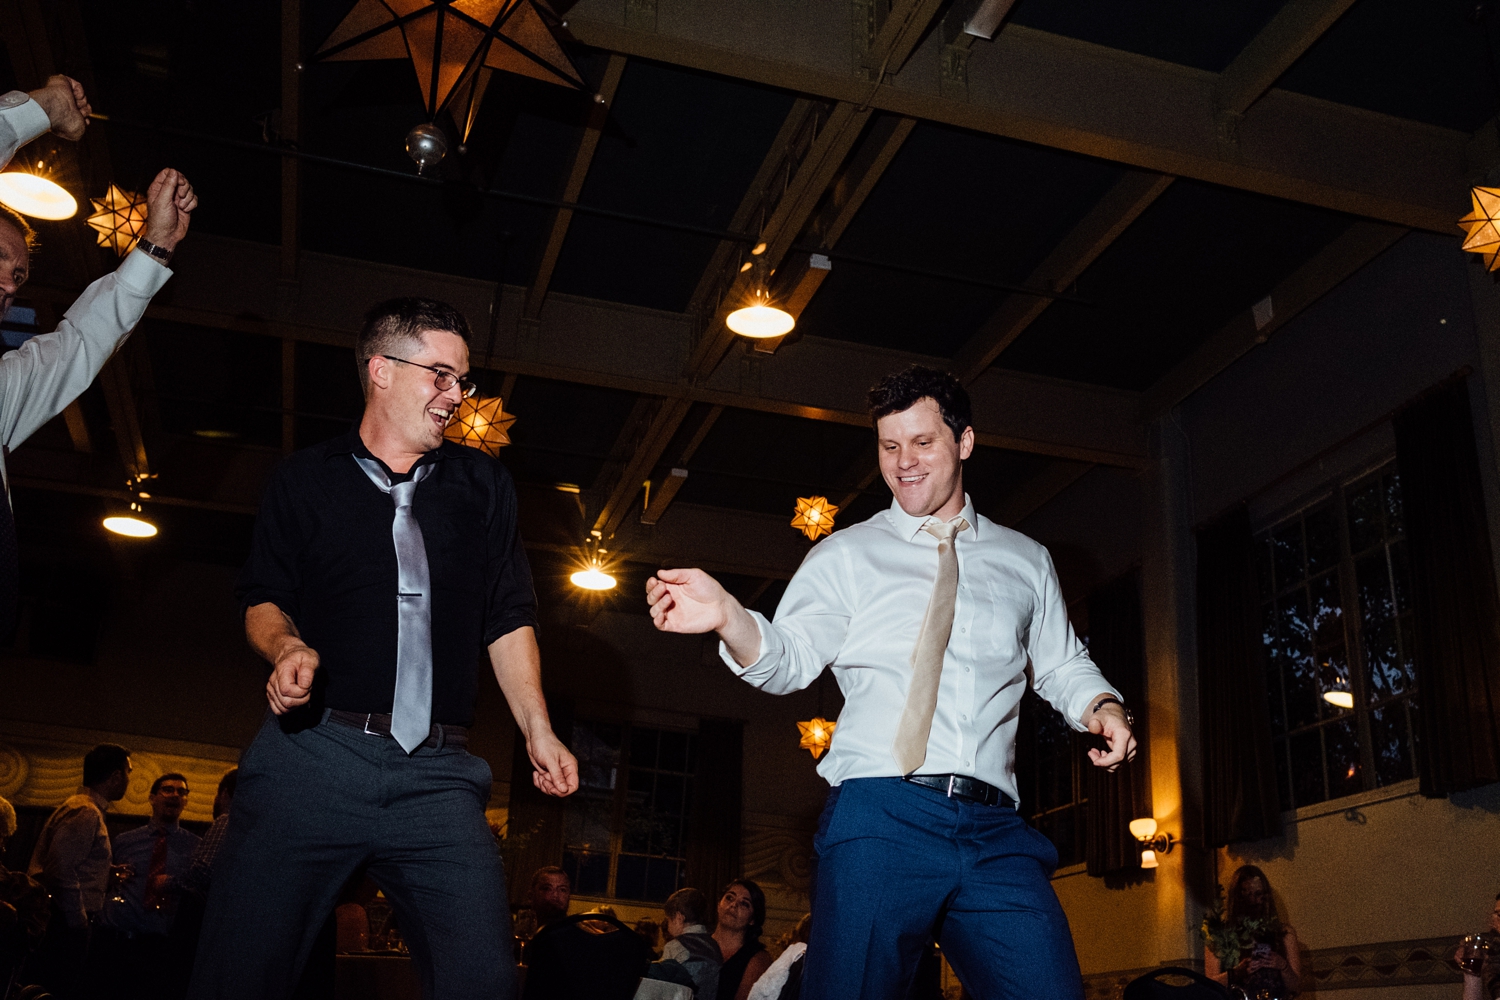 Dancing at a wedding Portland documentary wedding photographer Alison Smith Thistledown Photography